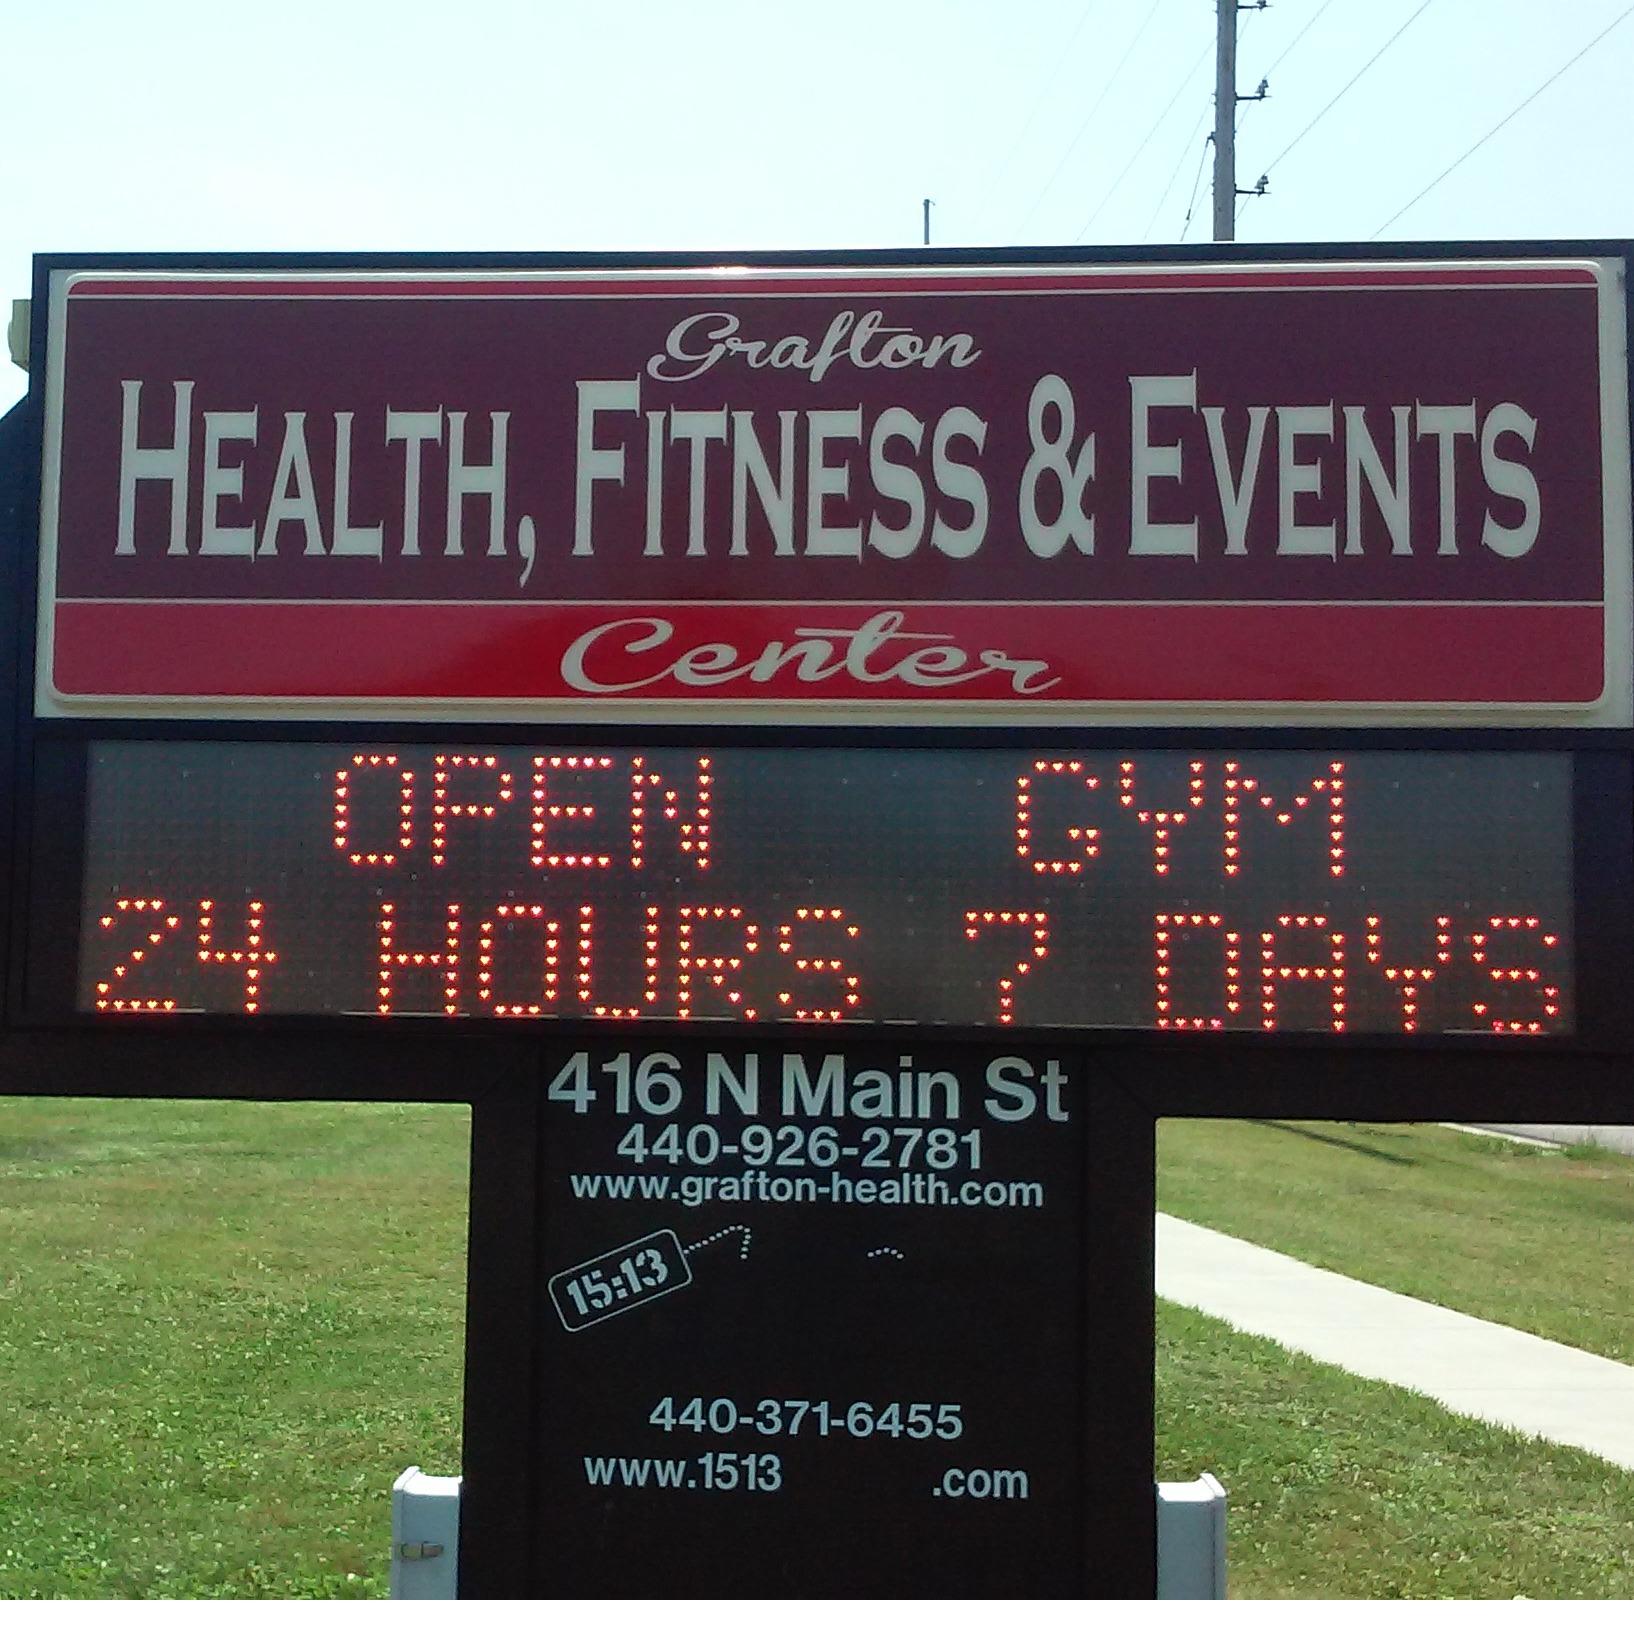 Grafton Health, Fitness & Events Center